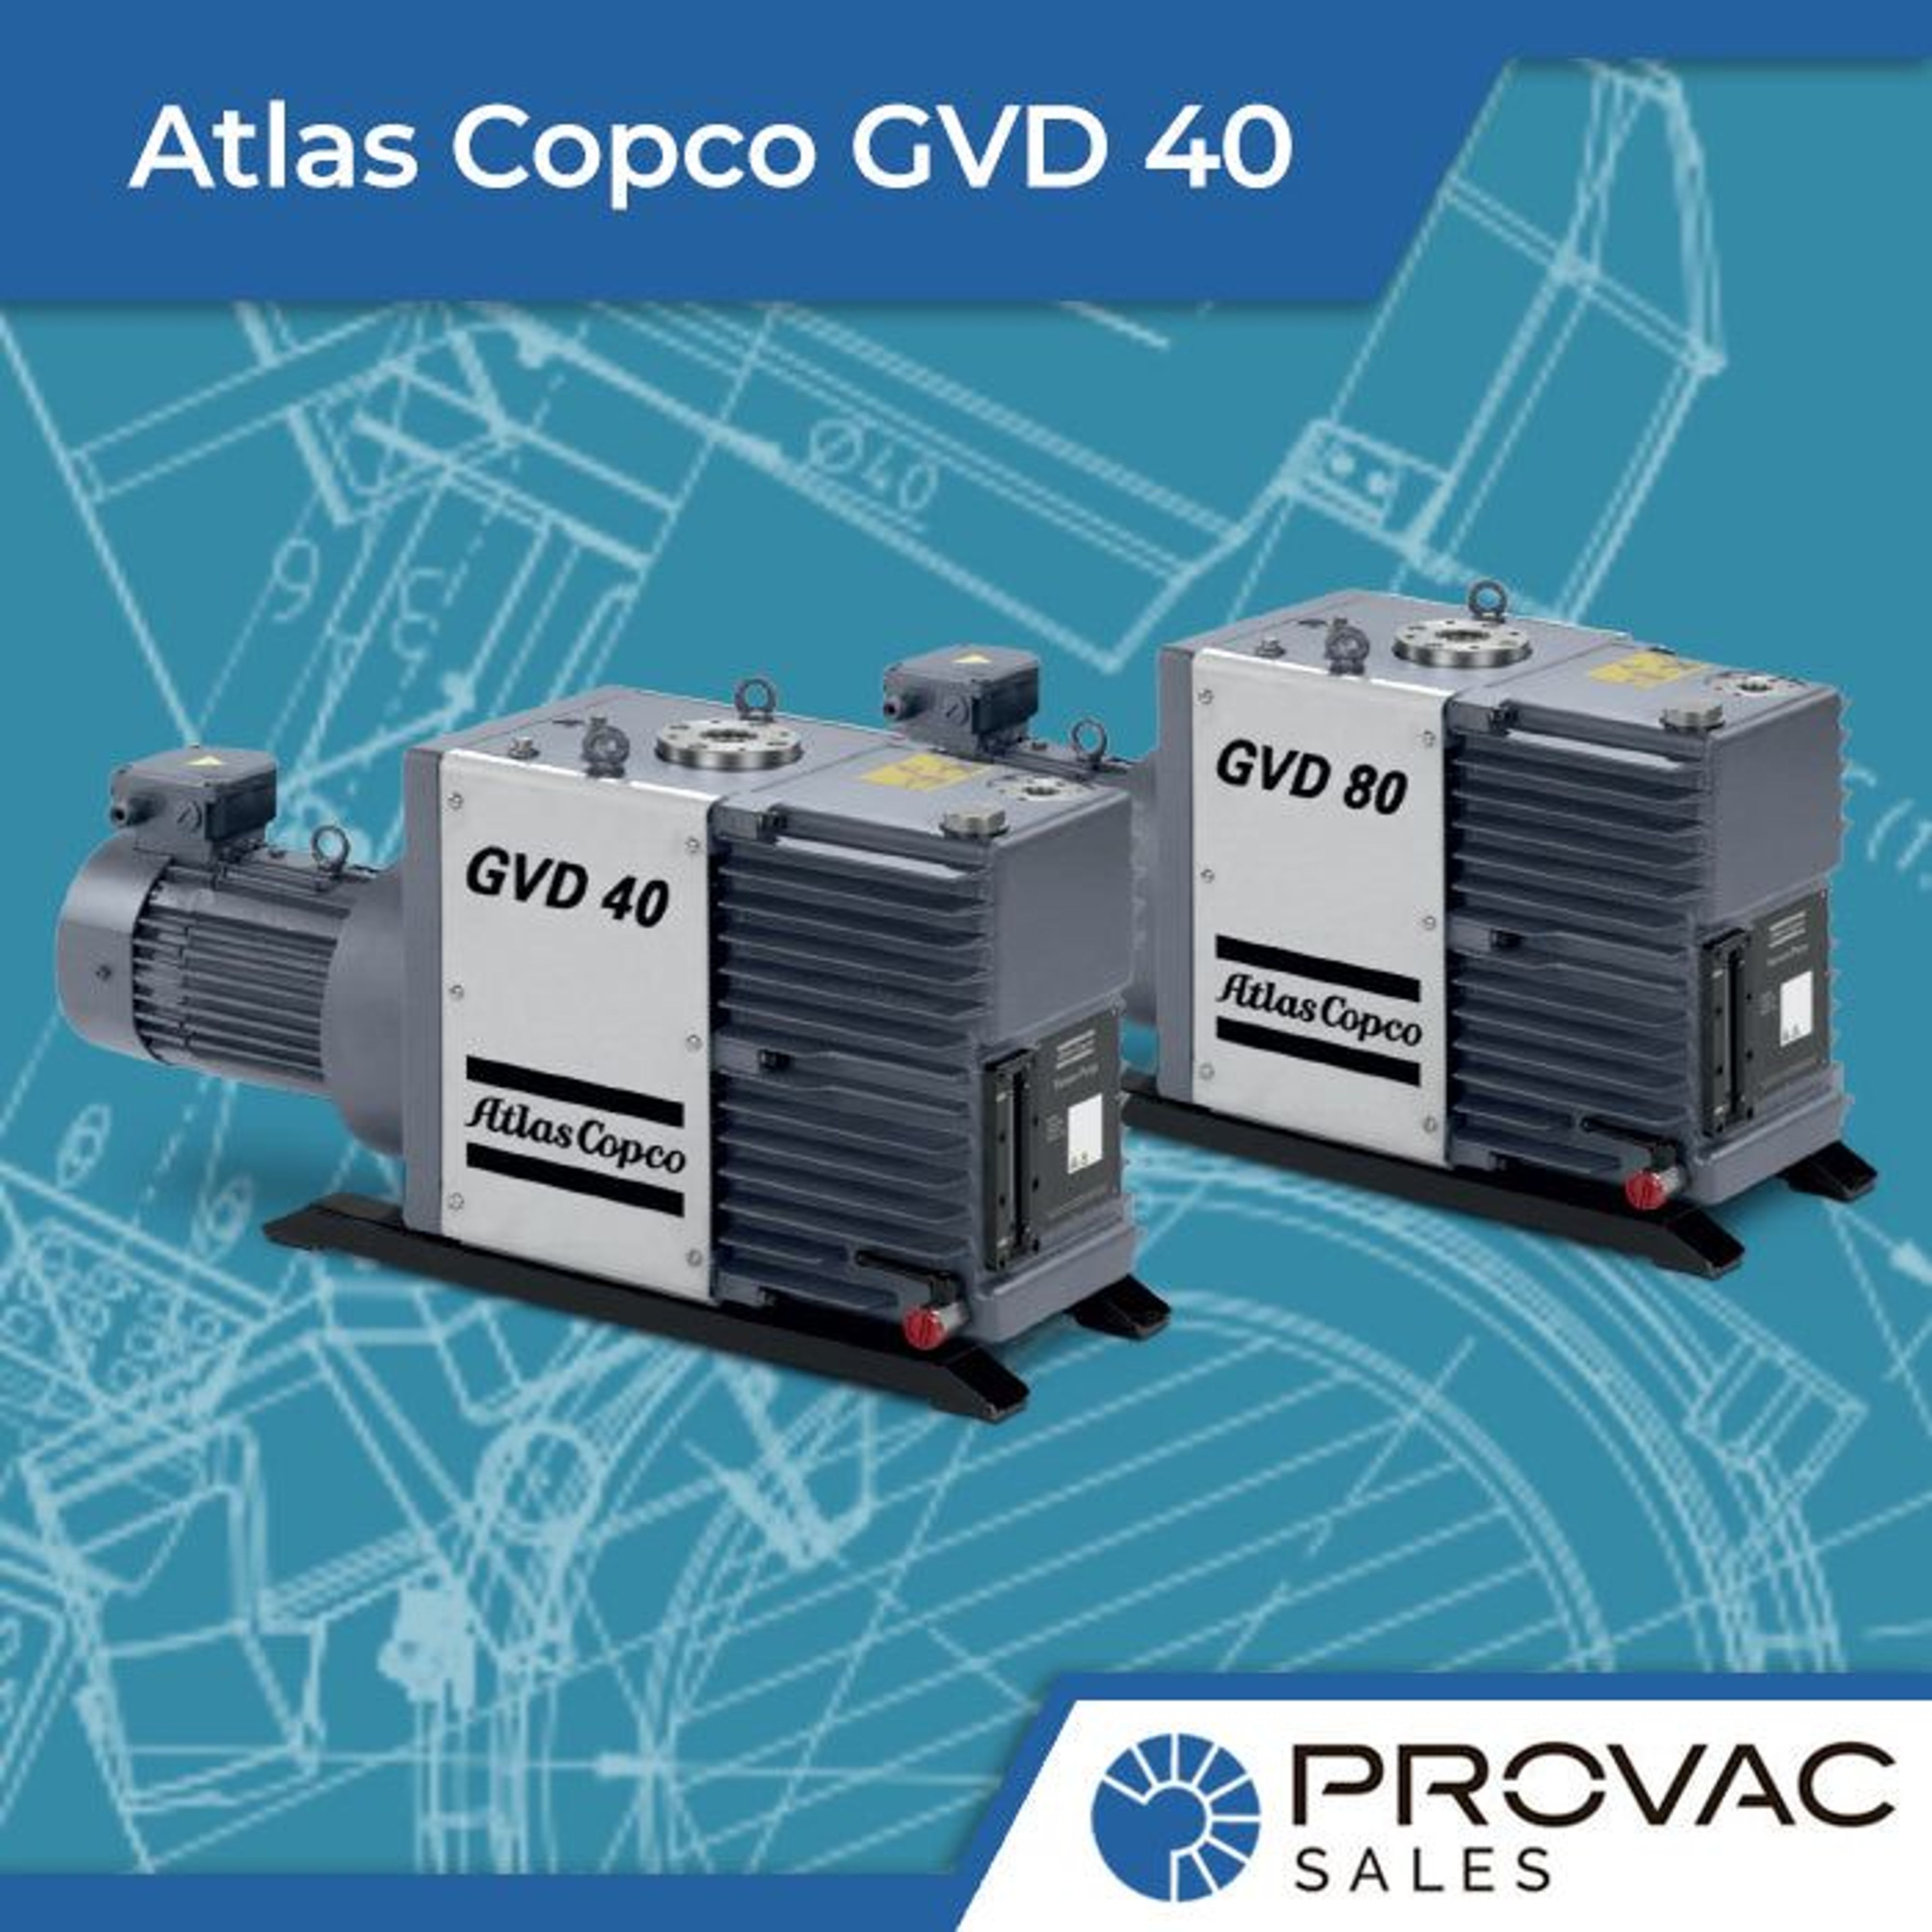 On Sale Now: Atlas Copco GVD 40 Rotary Vane Pump Background